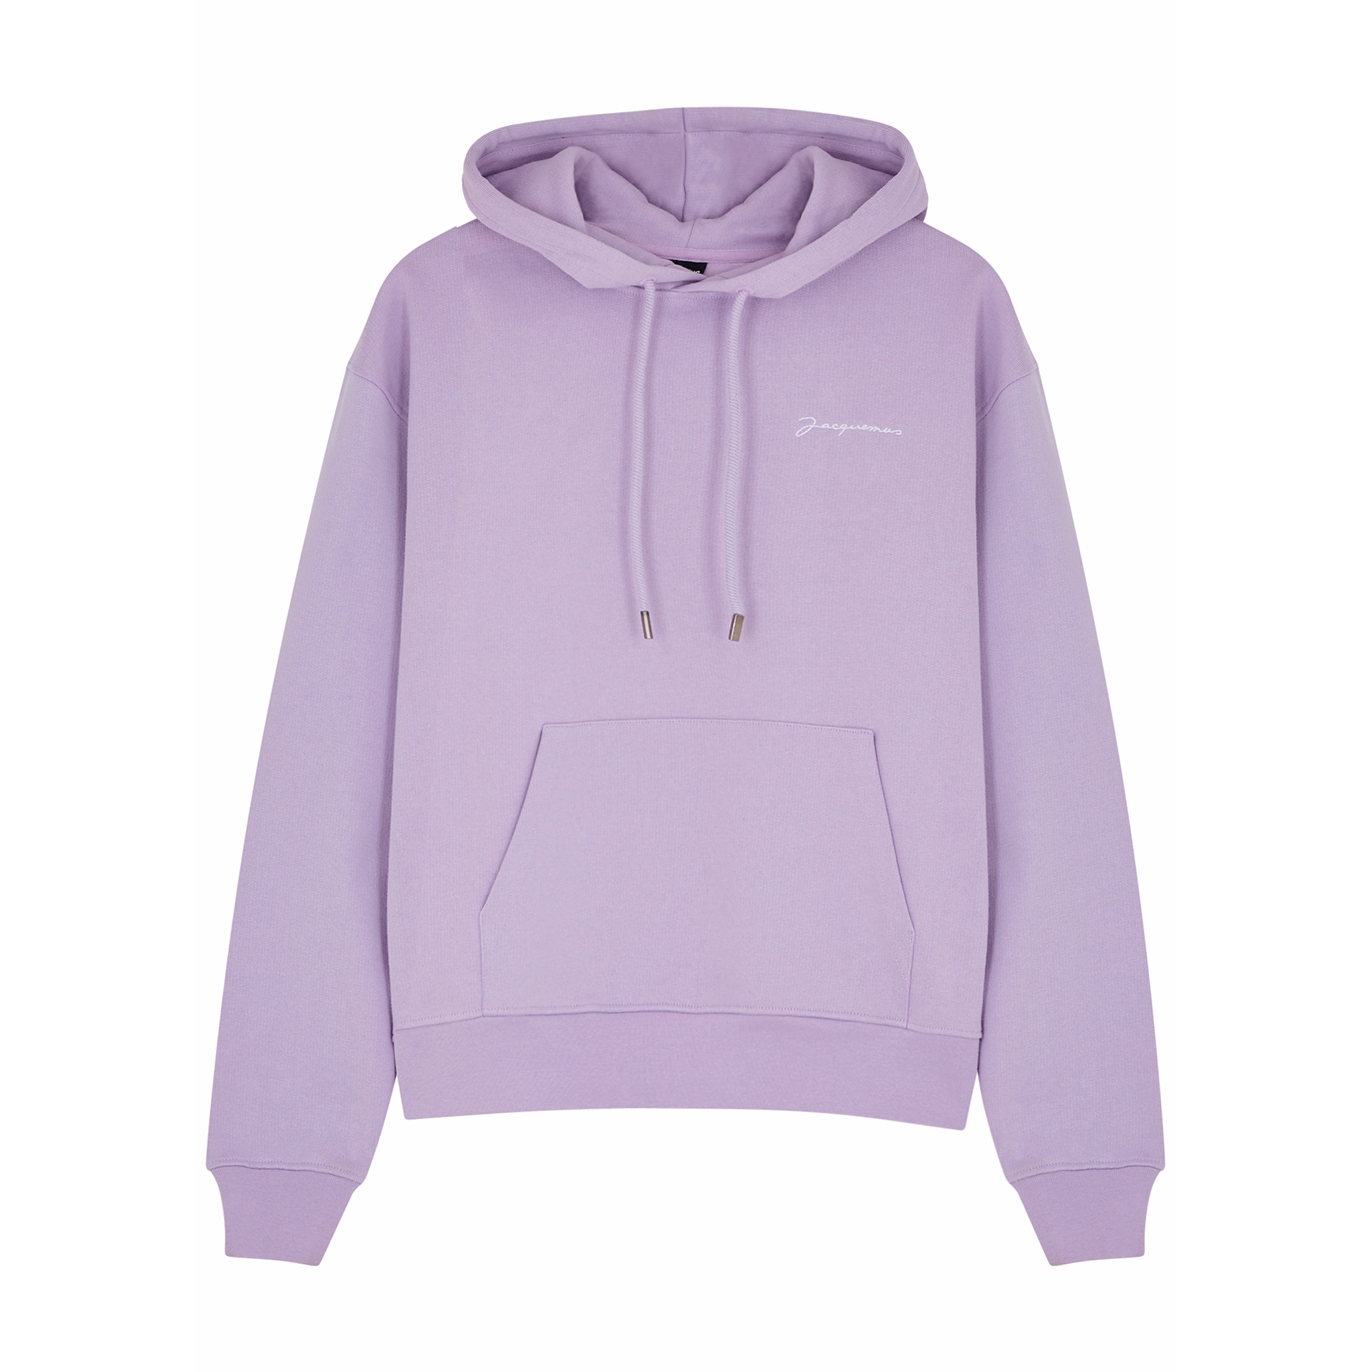 Jacquemus Le Sweatshirt Brode Lilac Hooded Cotton Sweatshirt - Purple - S